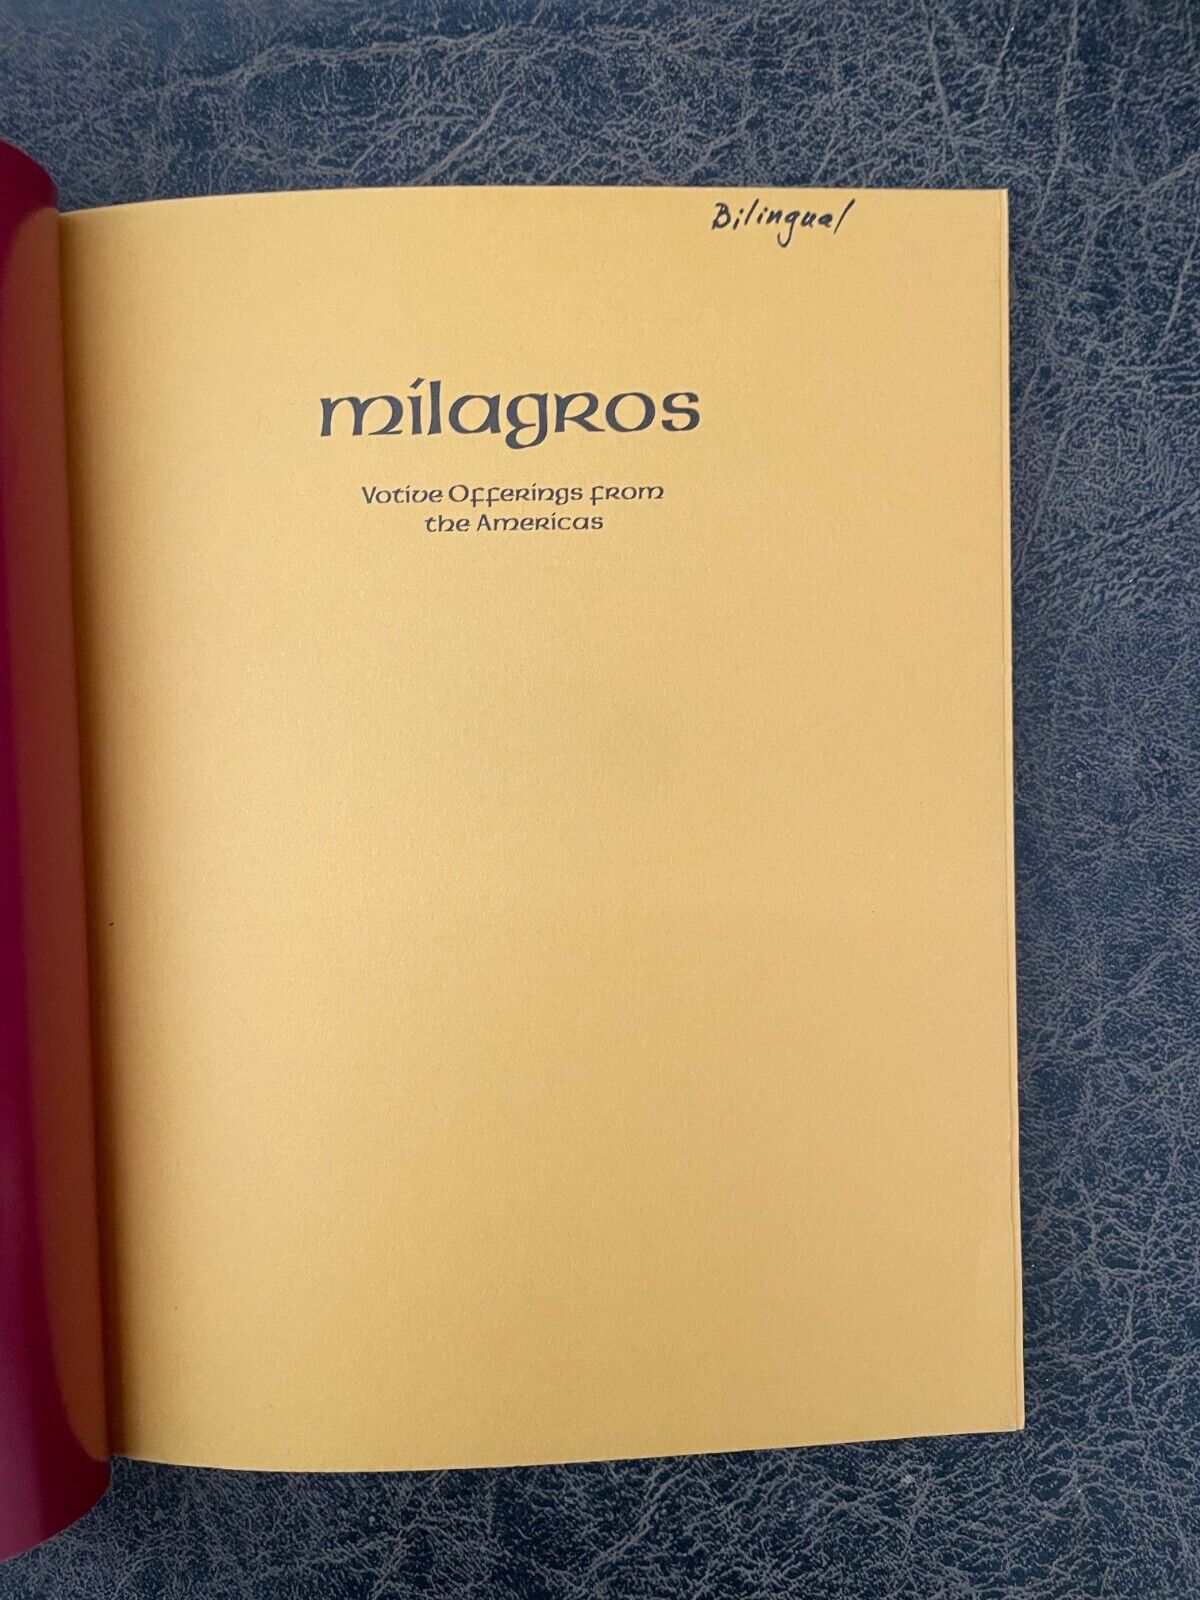 MILAGROS VOTIVE OFFERINGS-BILINGUAL BOOK-NEW-OFRENDAS VOTIVAS-DE LA AMERICAS Без бренда - фотография #12